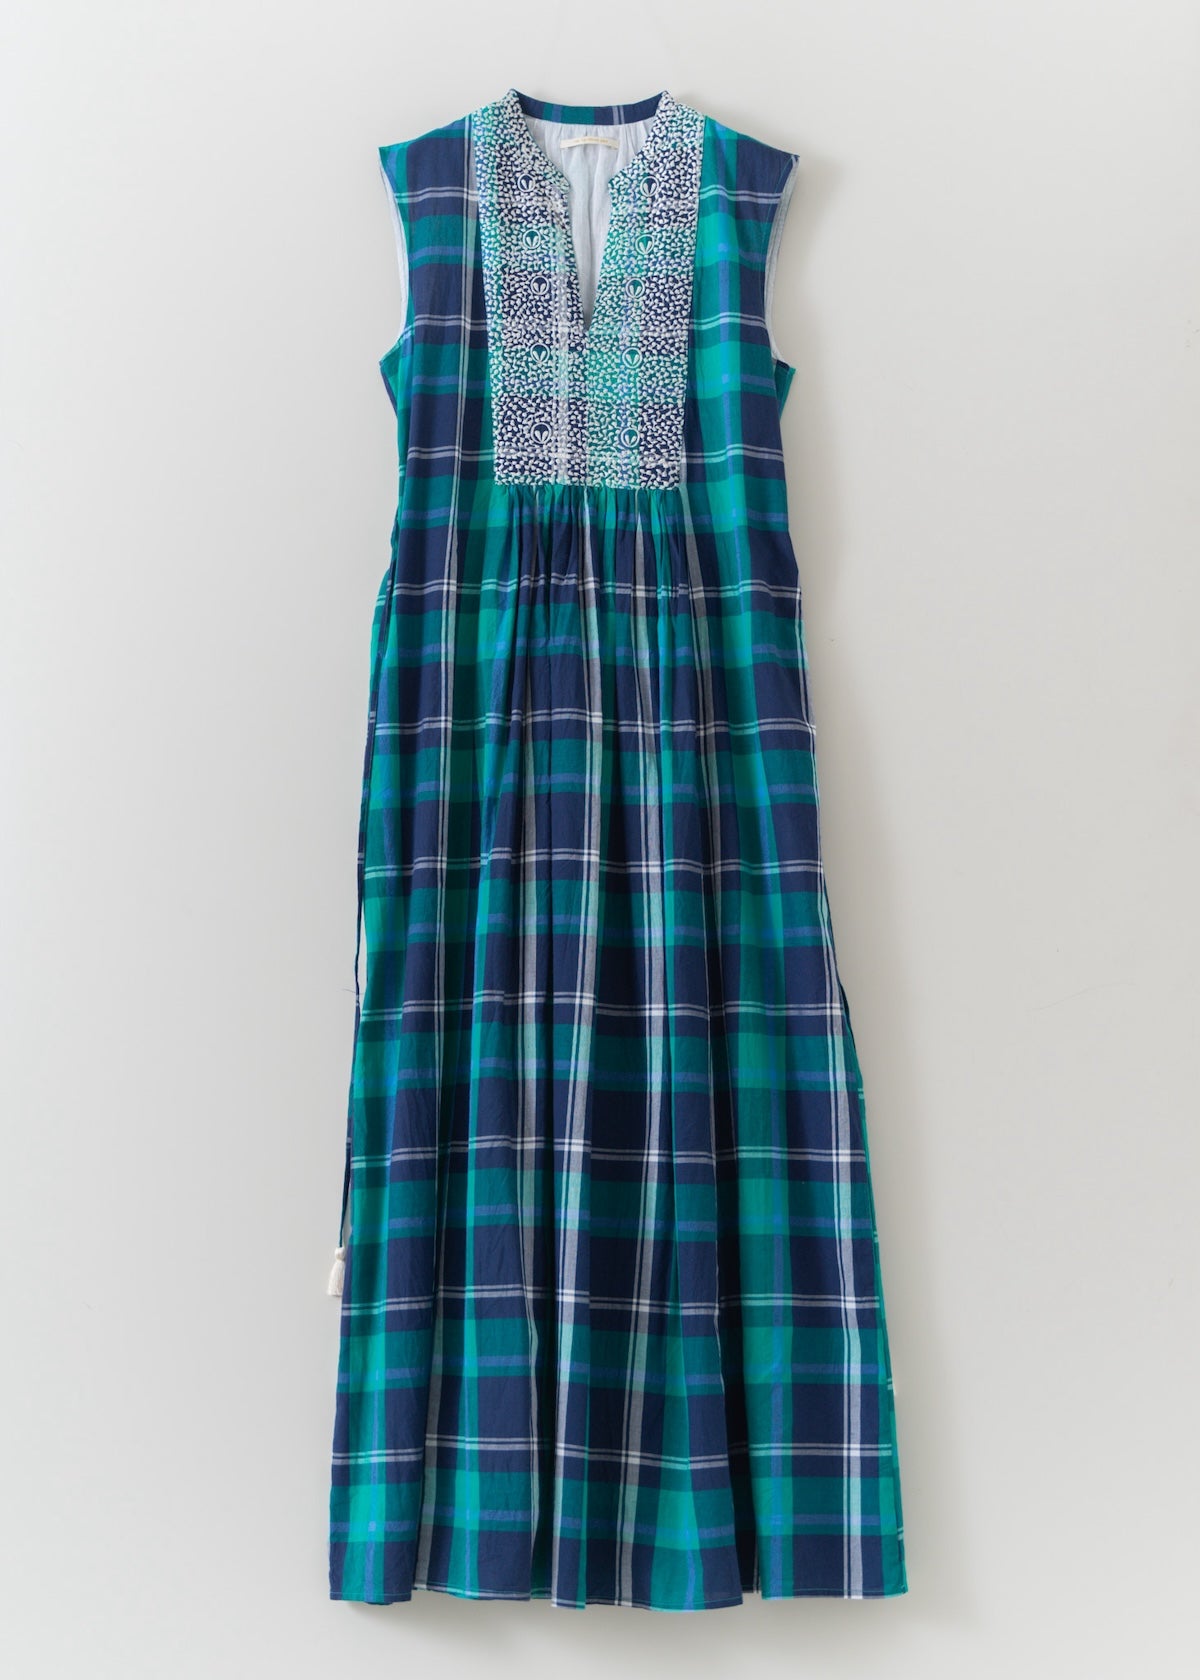 Madrascheck Embroidery Sleeveless Dress